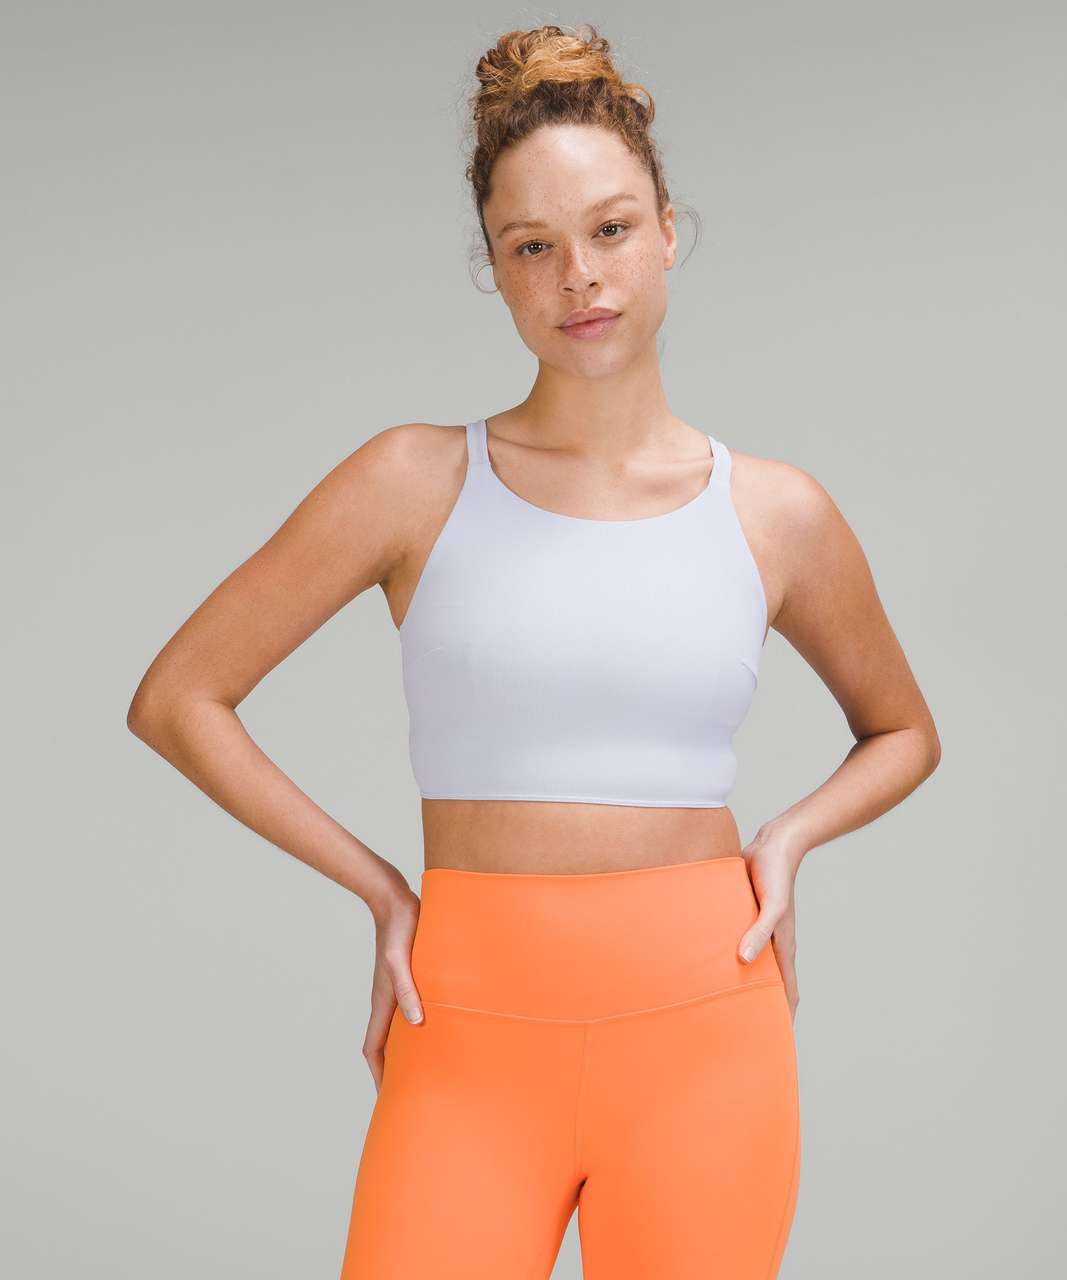 Lululemon Ribbed Back-Twist Sports Bra White Size XS - $42 (38% Off Retail)  - From Mylam